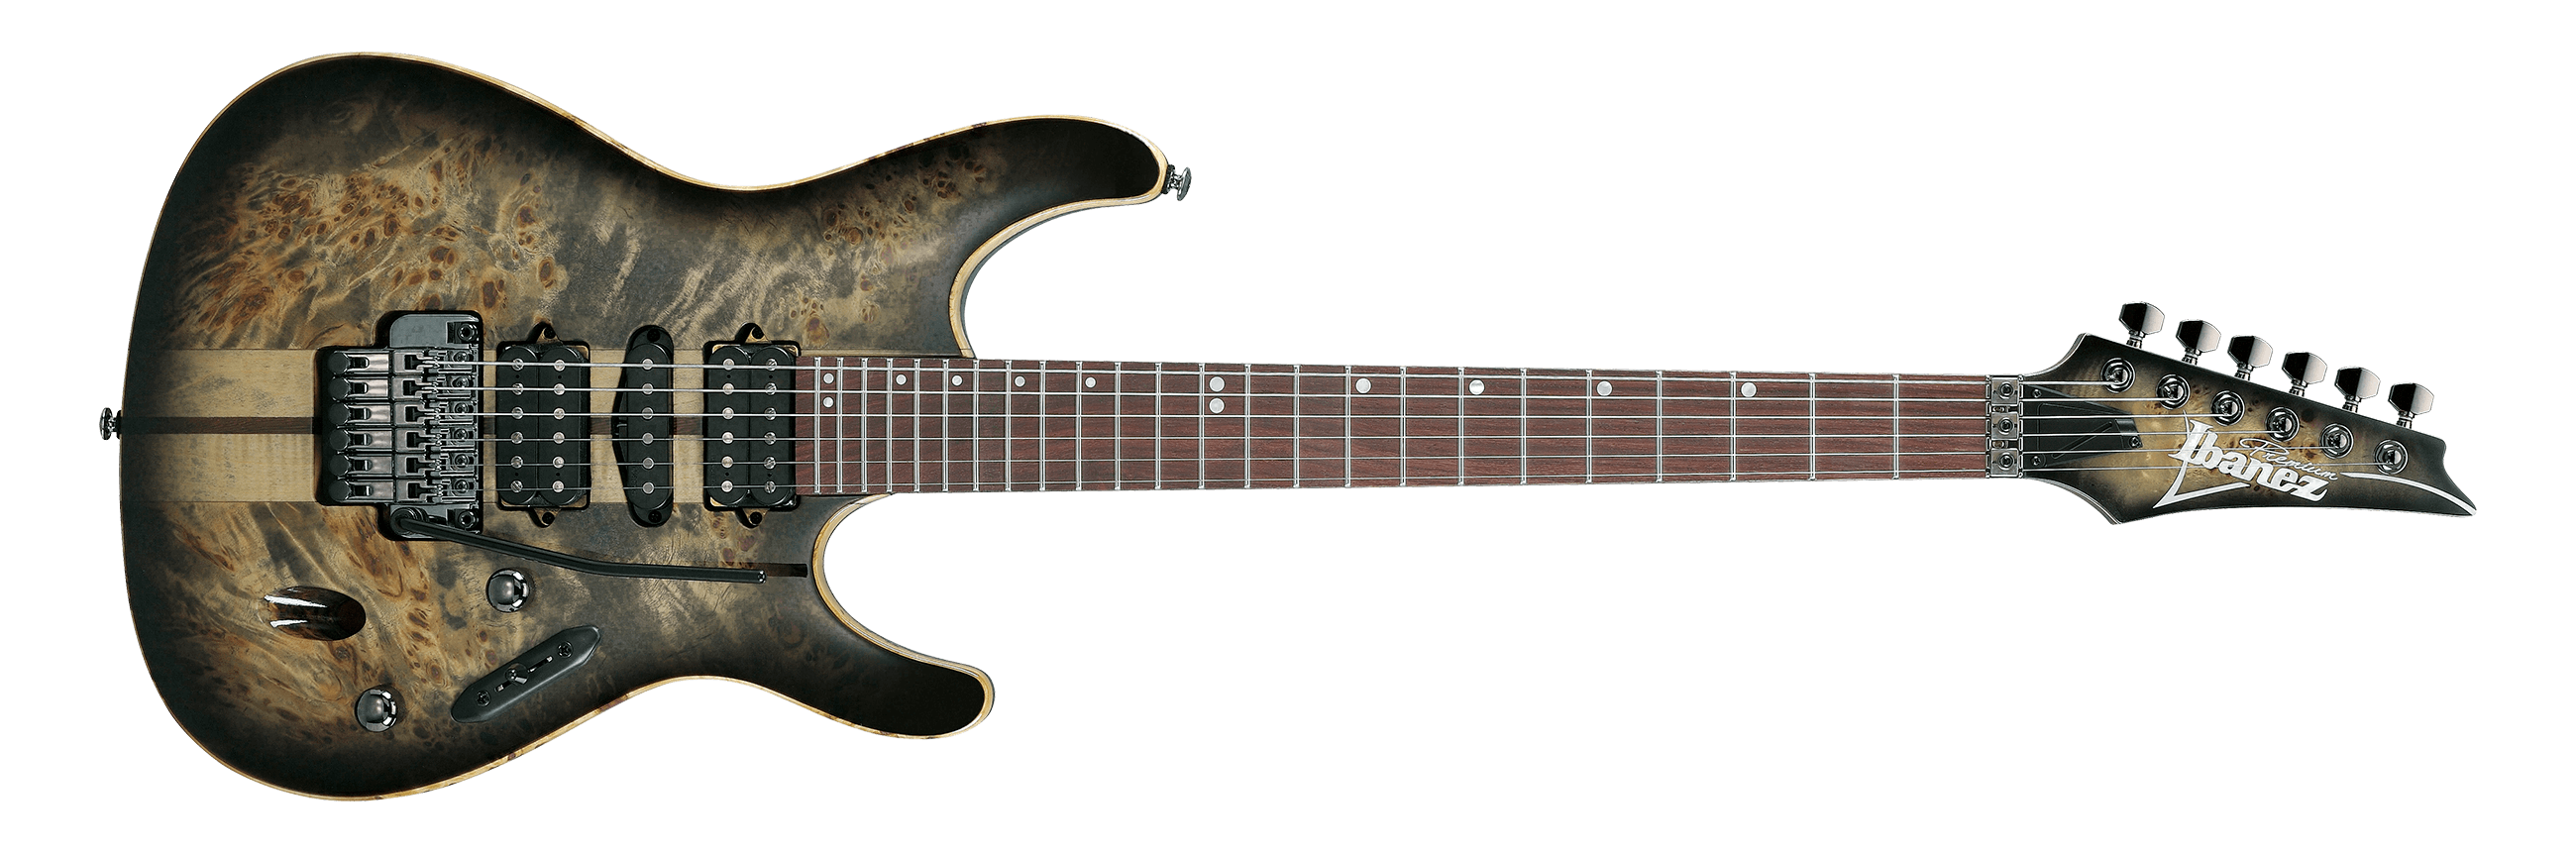 Ibanez S1070PBZCKB Electric Guitar - Charcoal Black Burst | Jack's On Queen